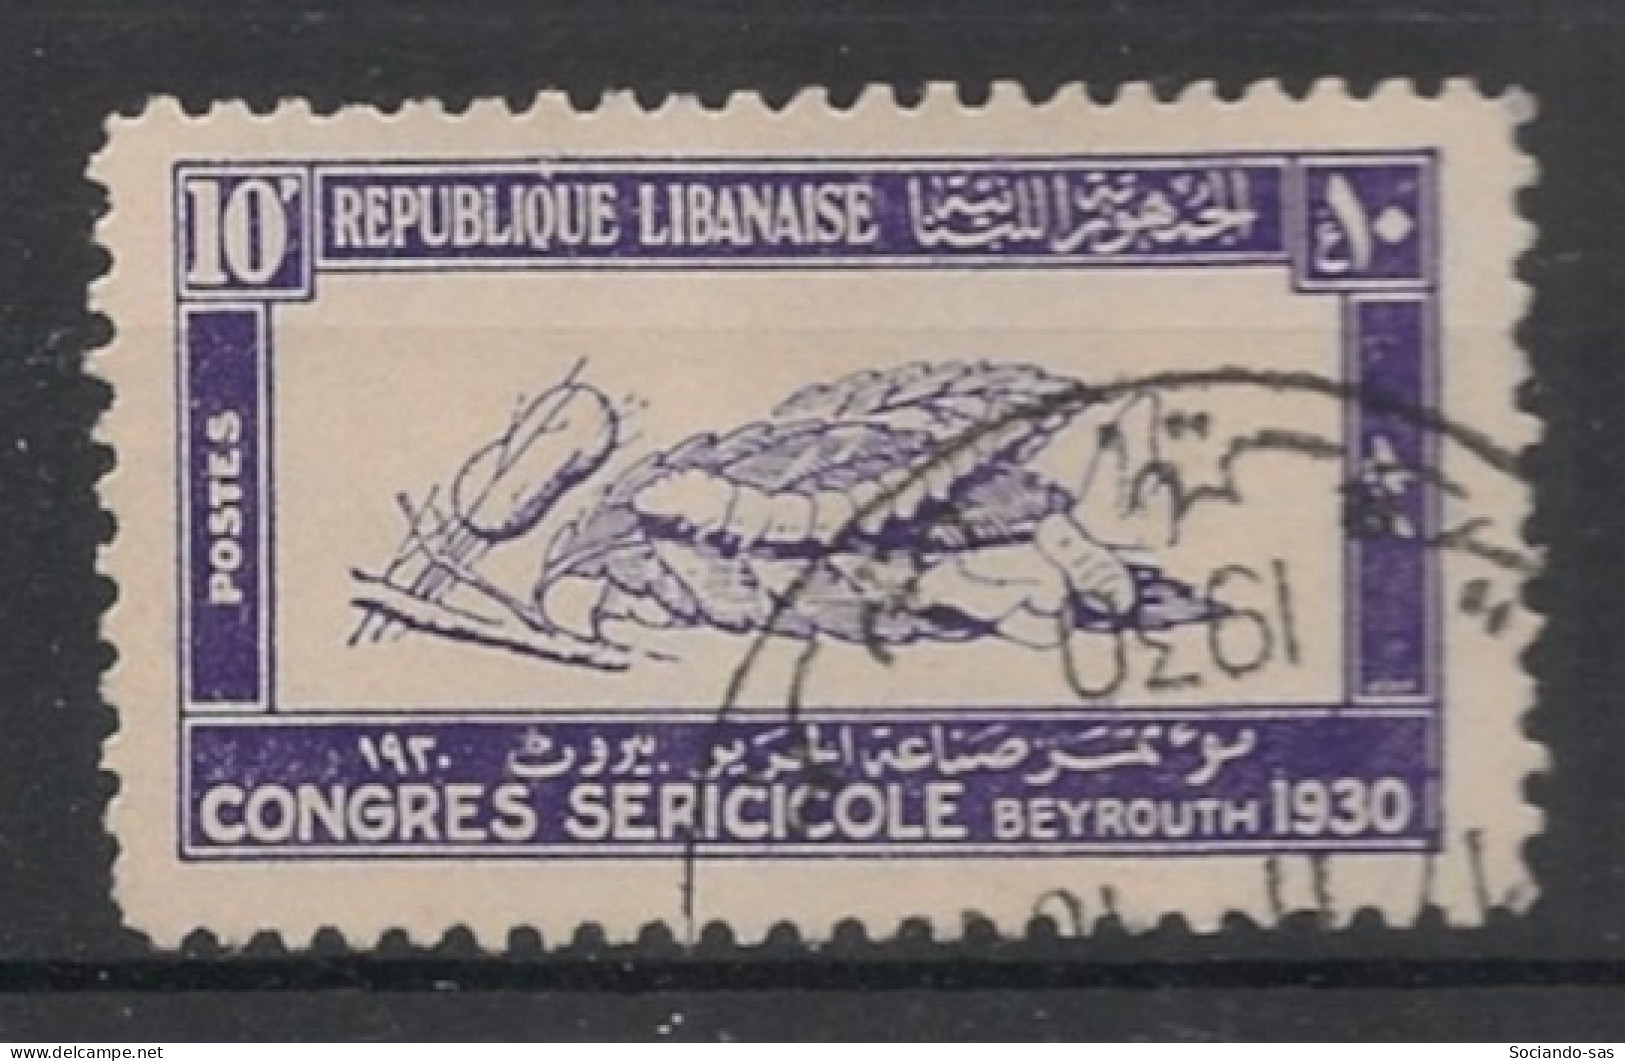 GRAND LIBAN - 1930 - N°YT. 125 - Vers à Soie 10pi Violet - Oblitéré / Used - Gebraucht